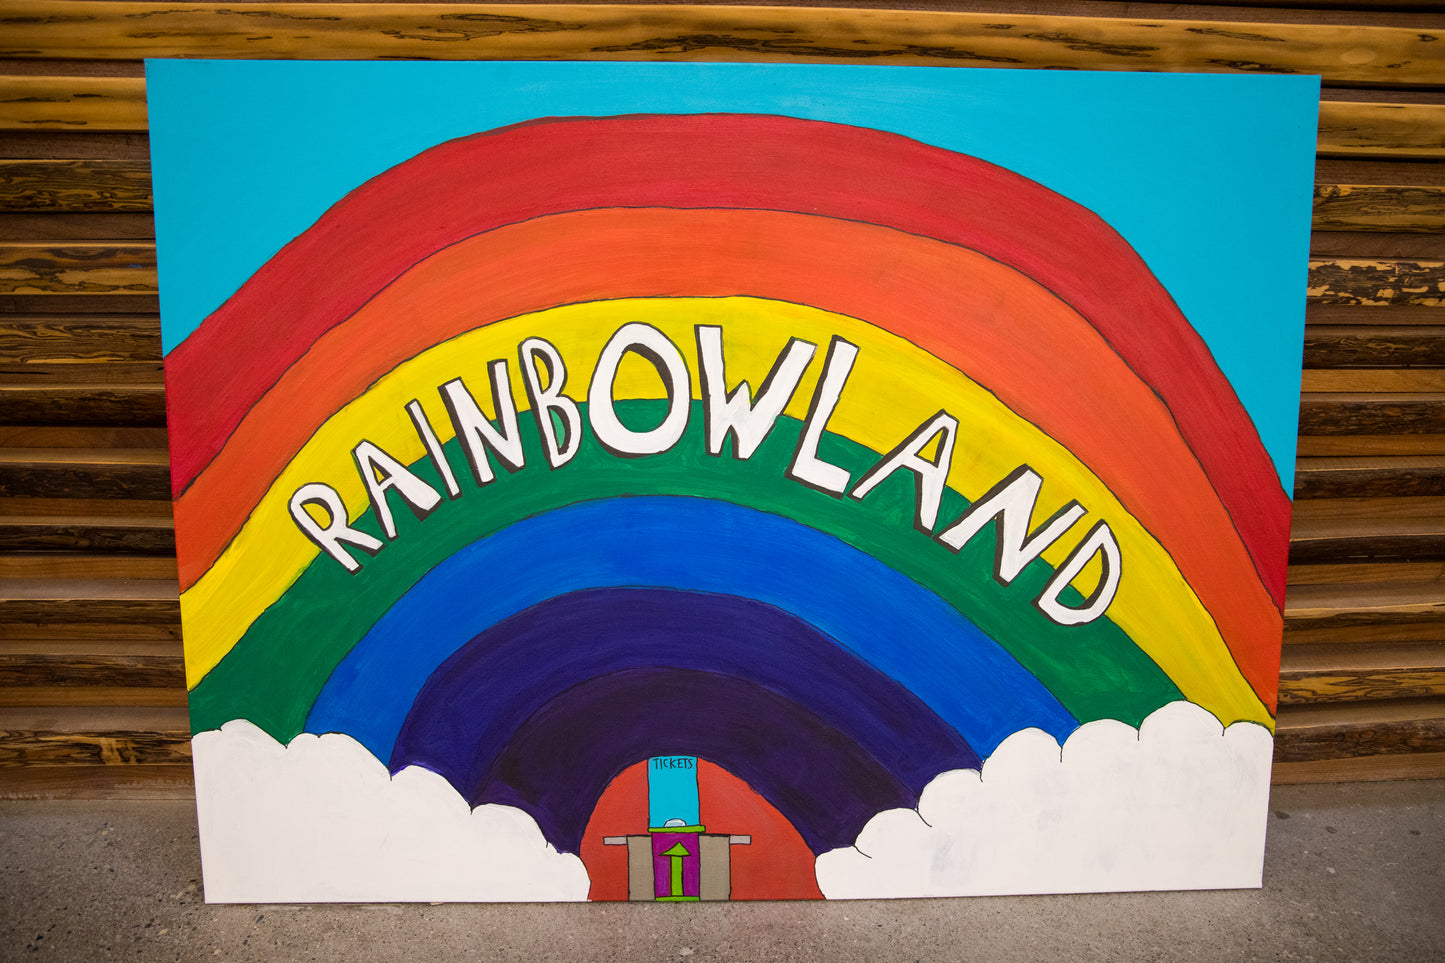 Rainbow Land